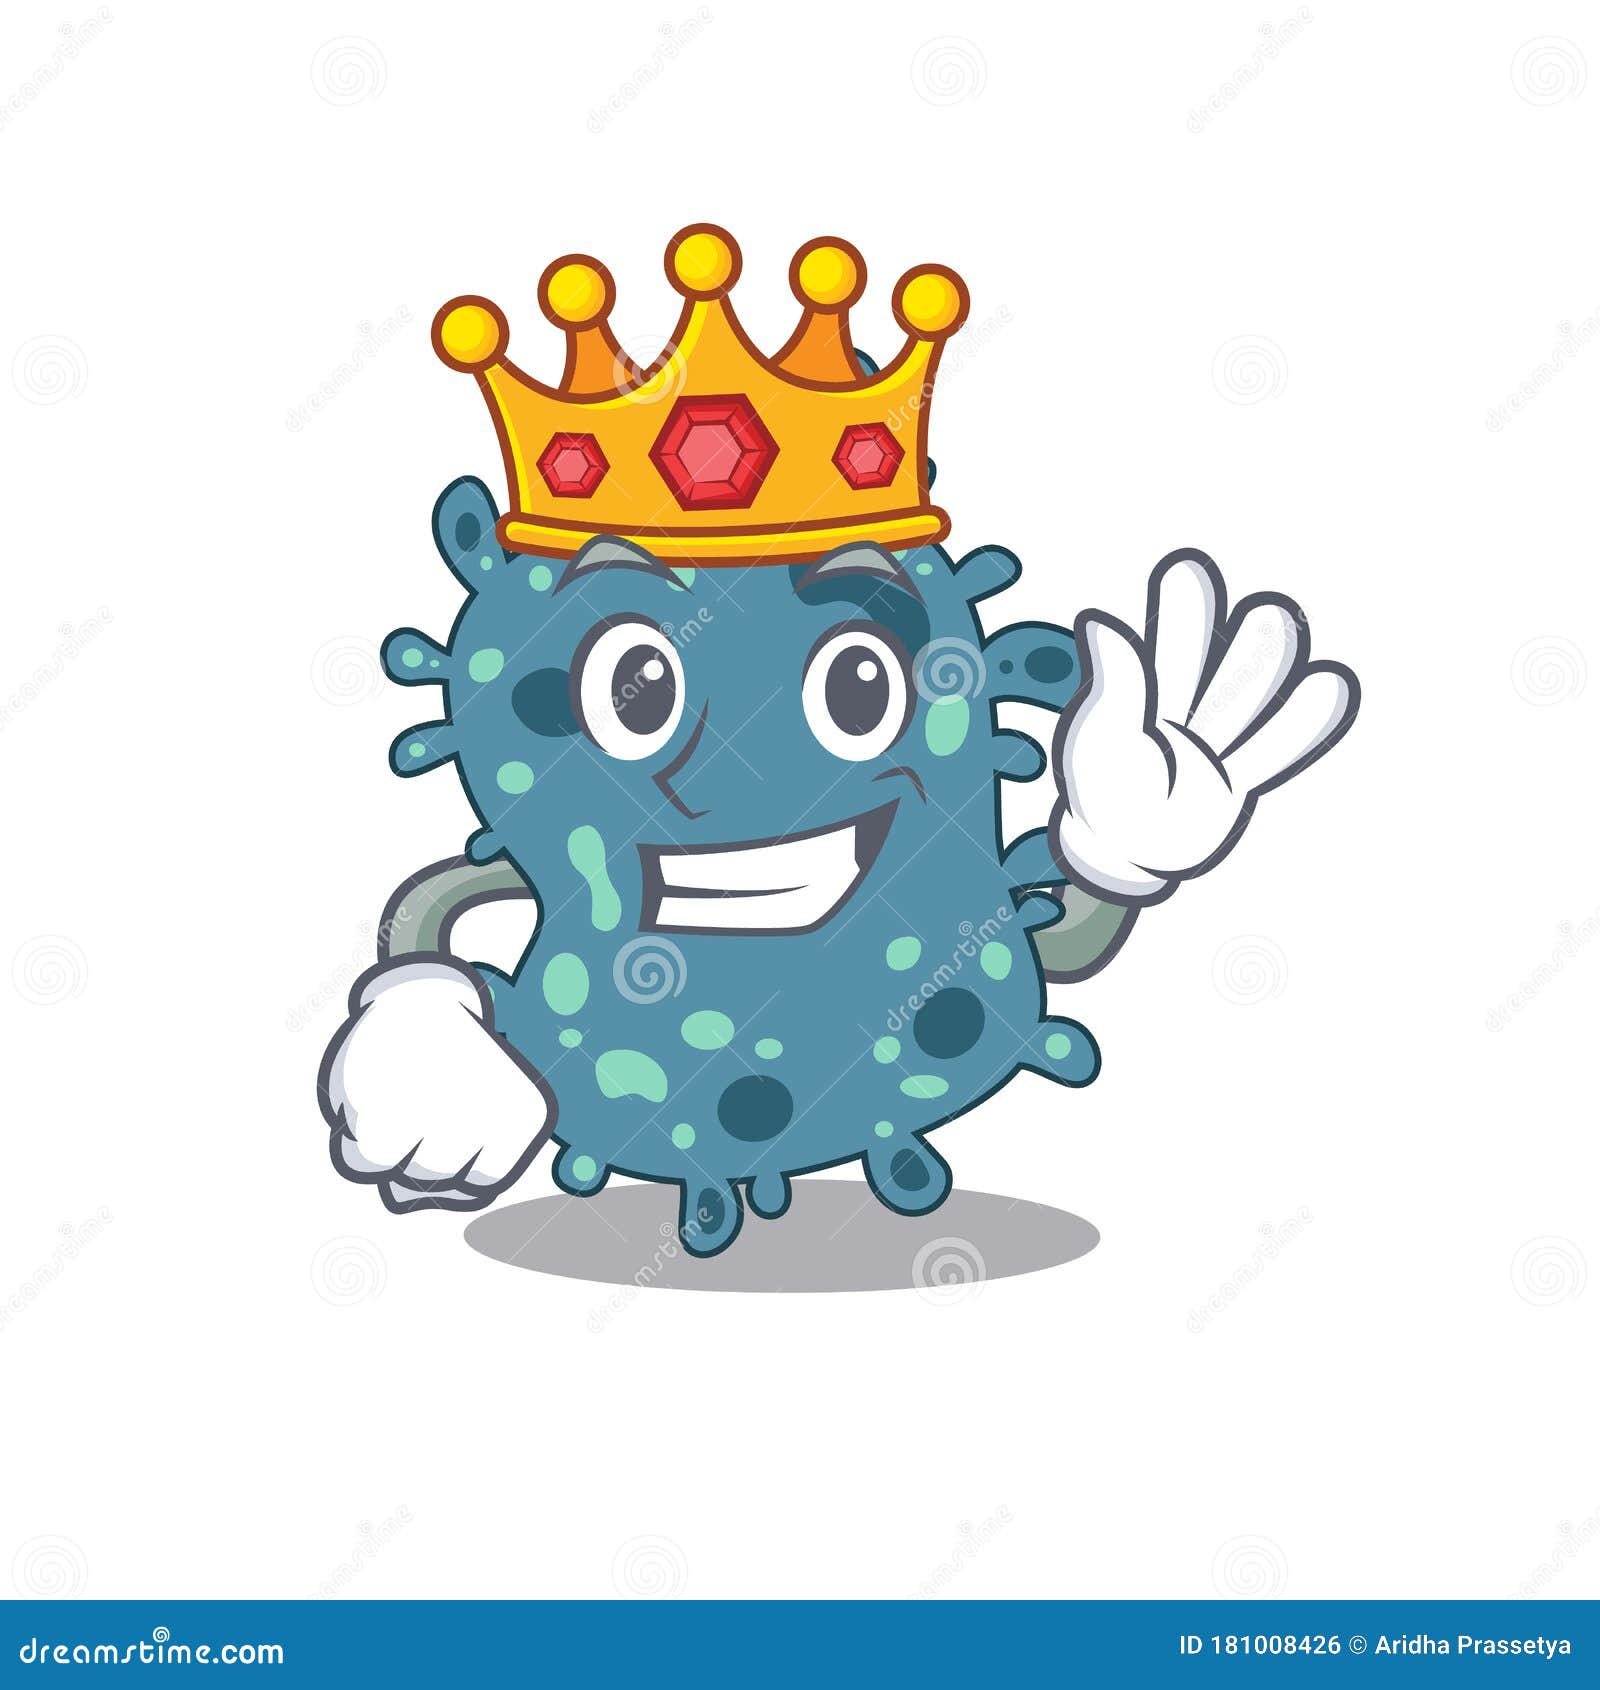 a wise king of rickettsia mascot  style